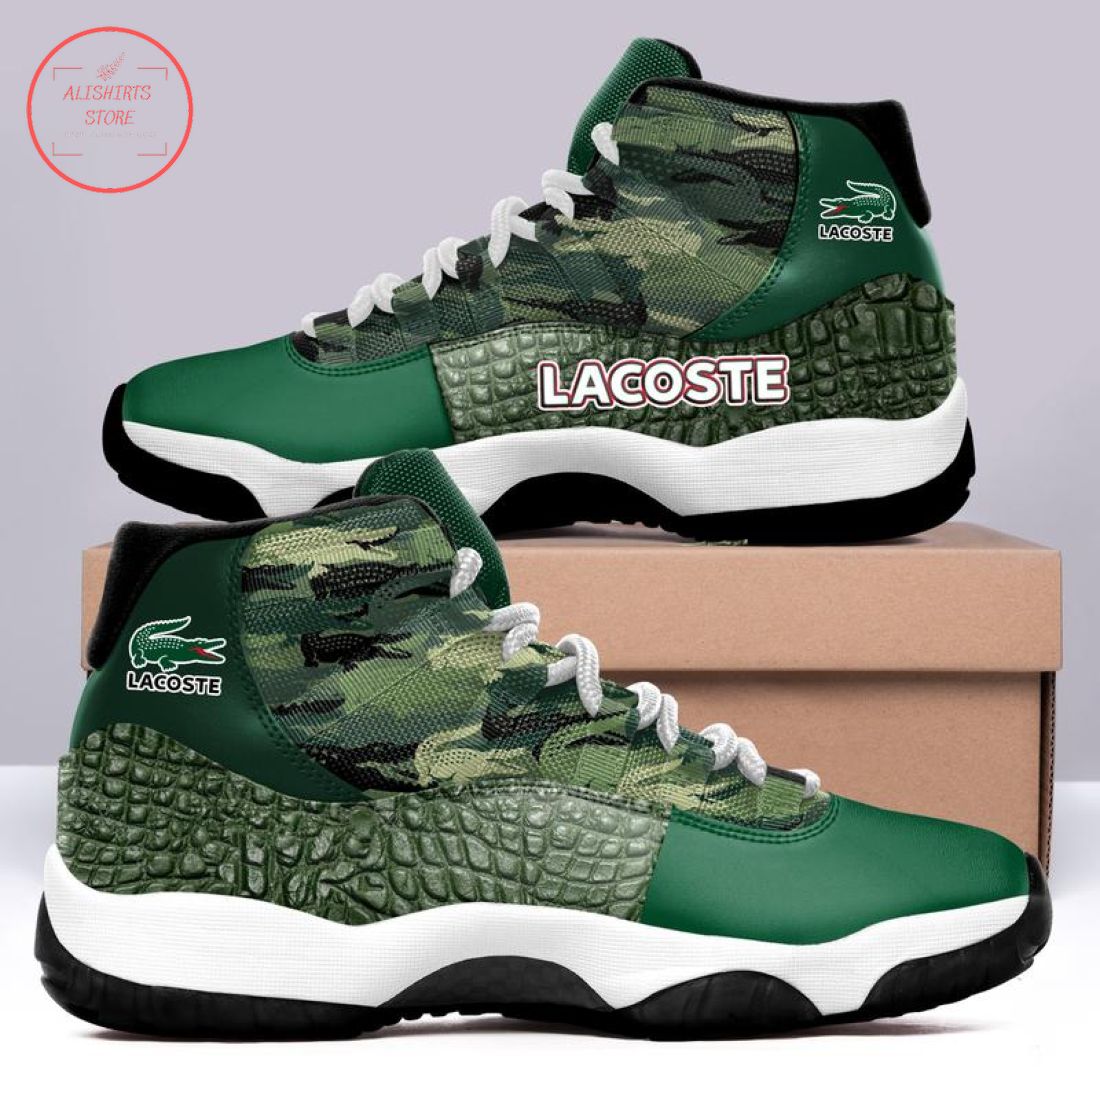 Lacoste Air Jordan 11 Luxury Sneaker Shoes